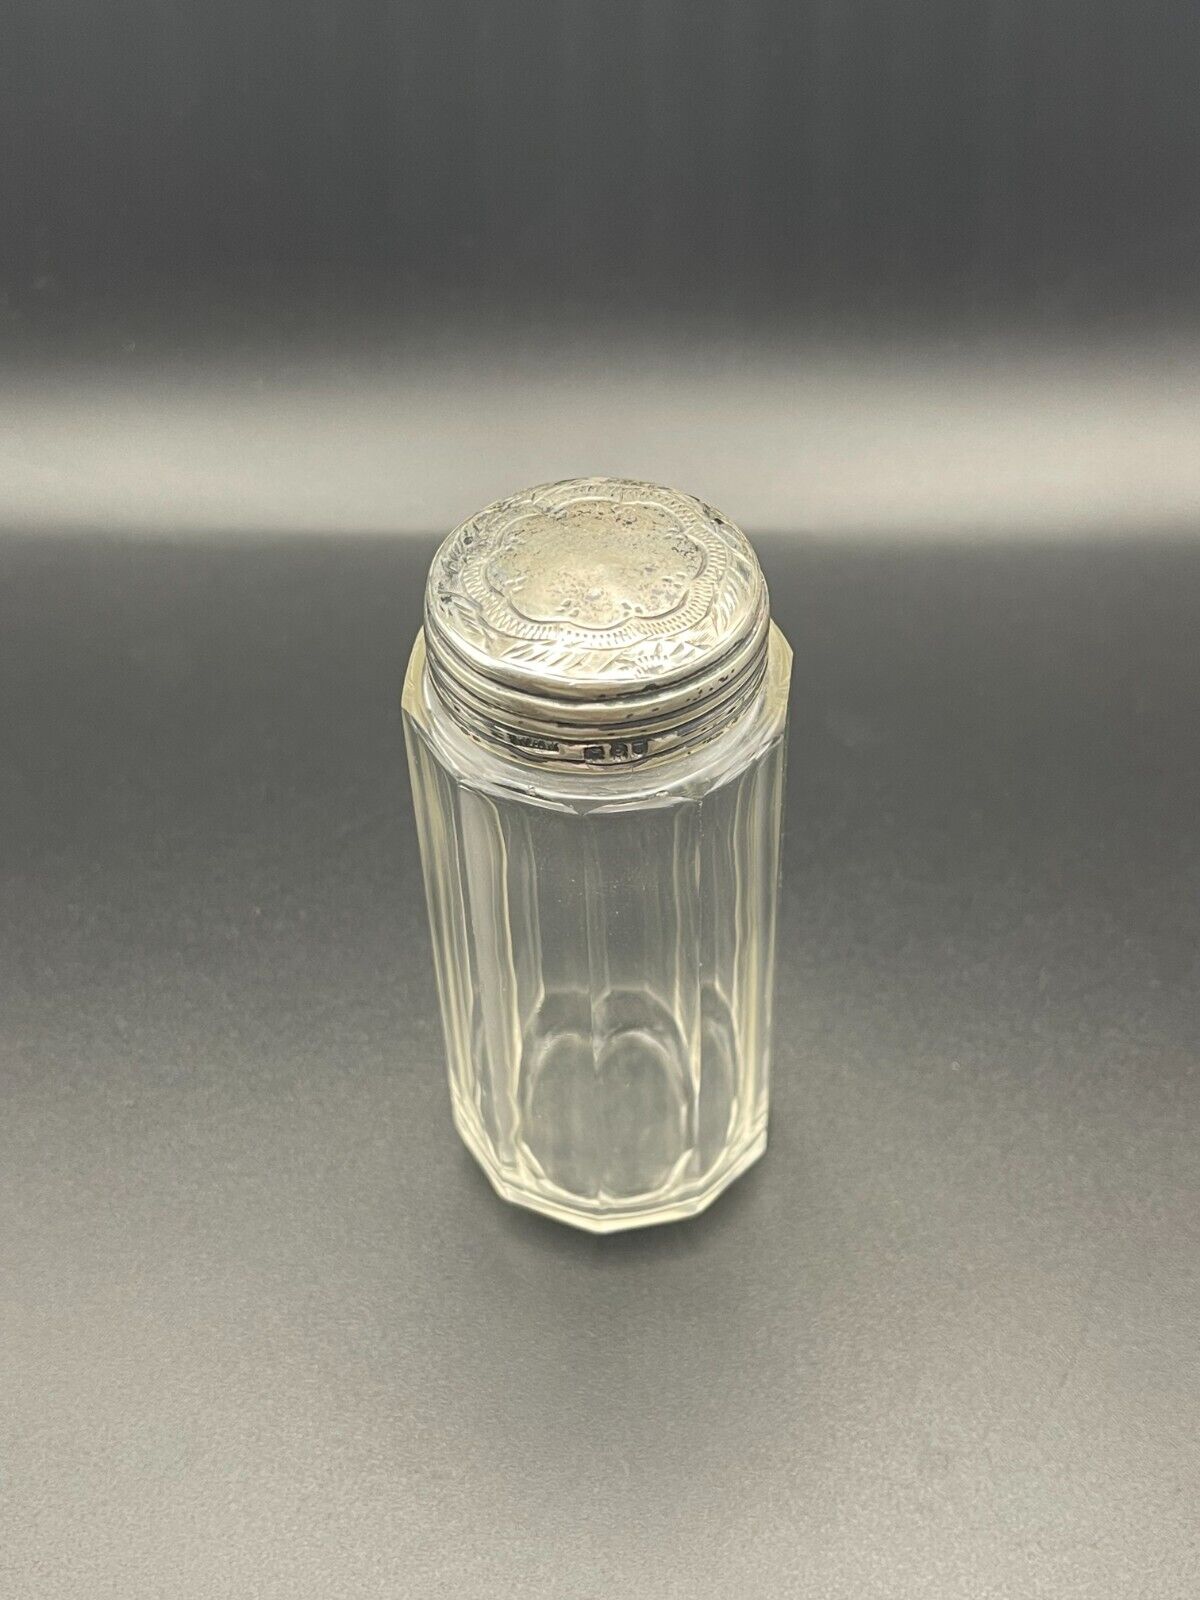 Antique Vanity: Sterling Silver Topped Glass Bottle, London 1900, Vintage Décor